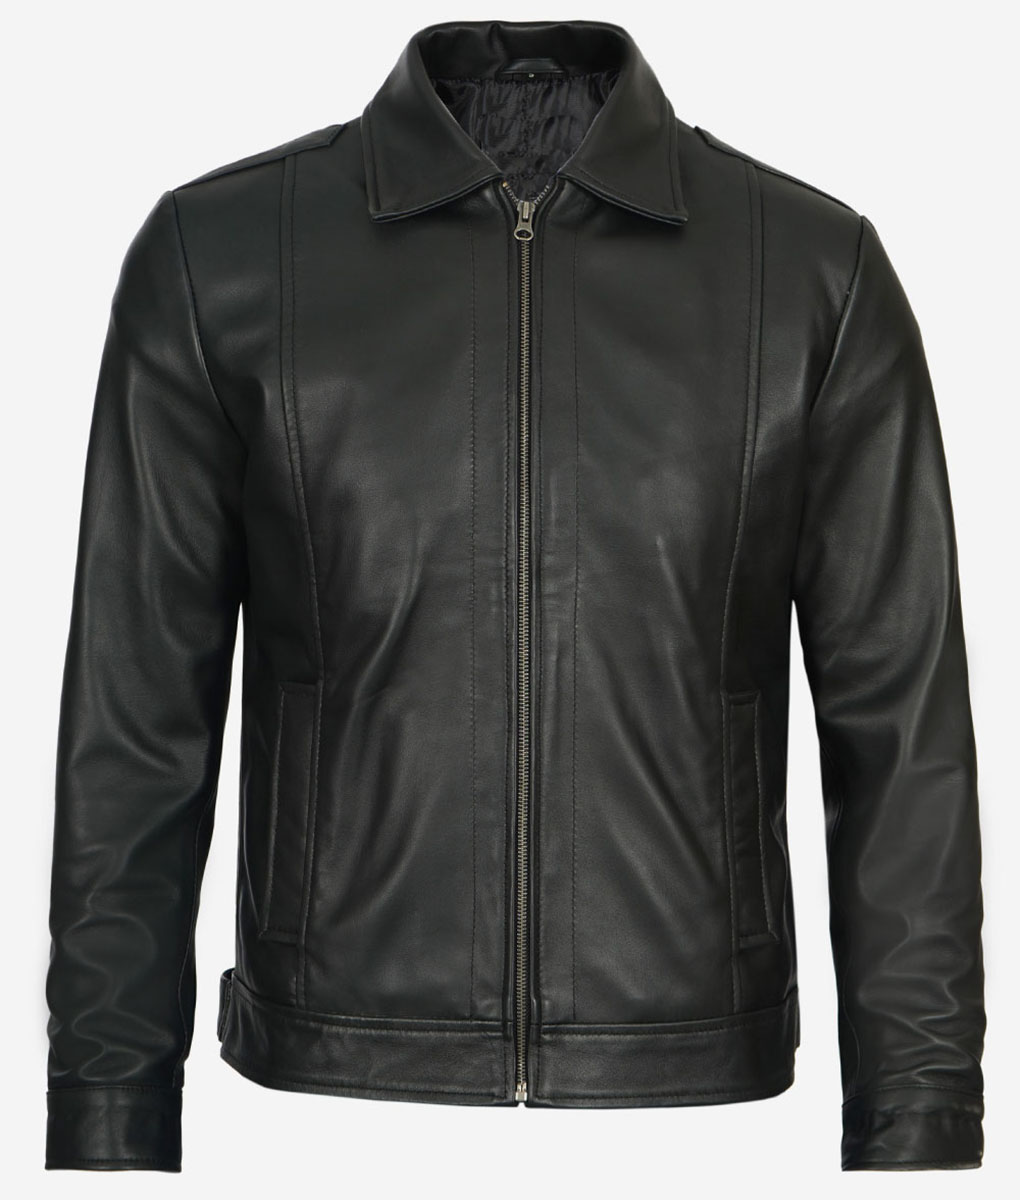 George Mens Black Leather Jacket